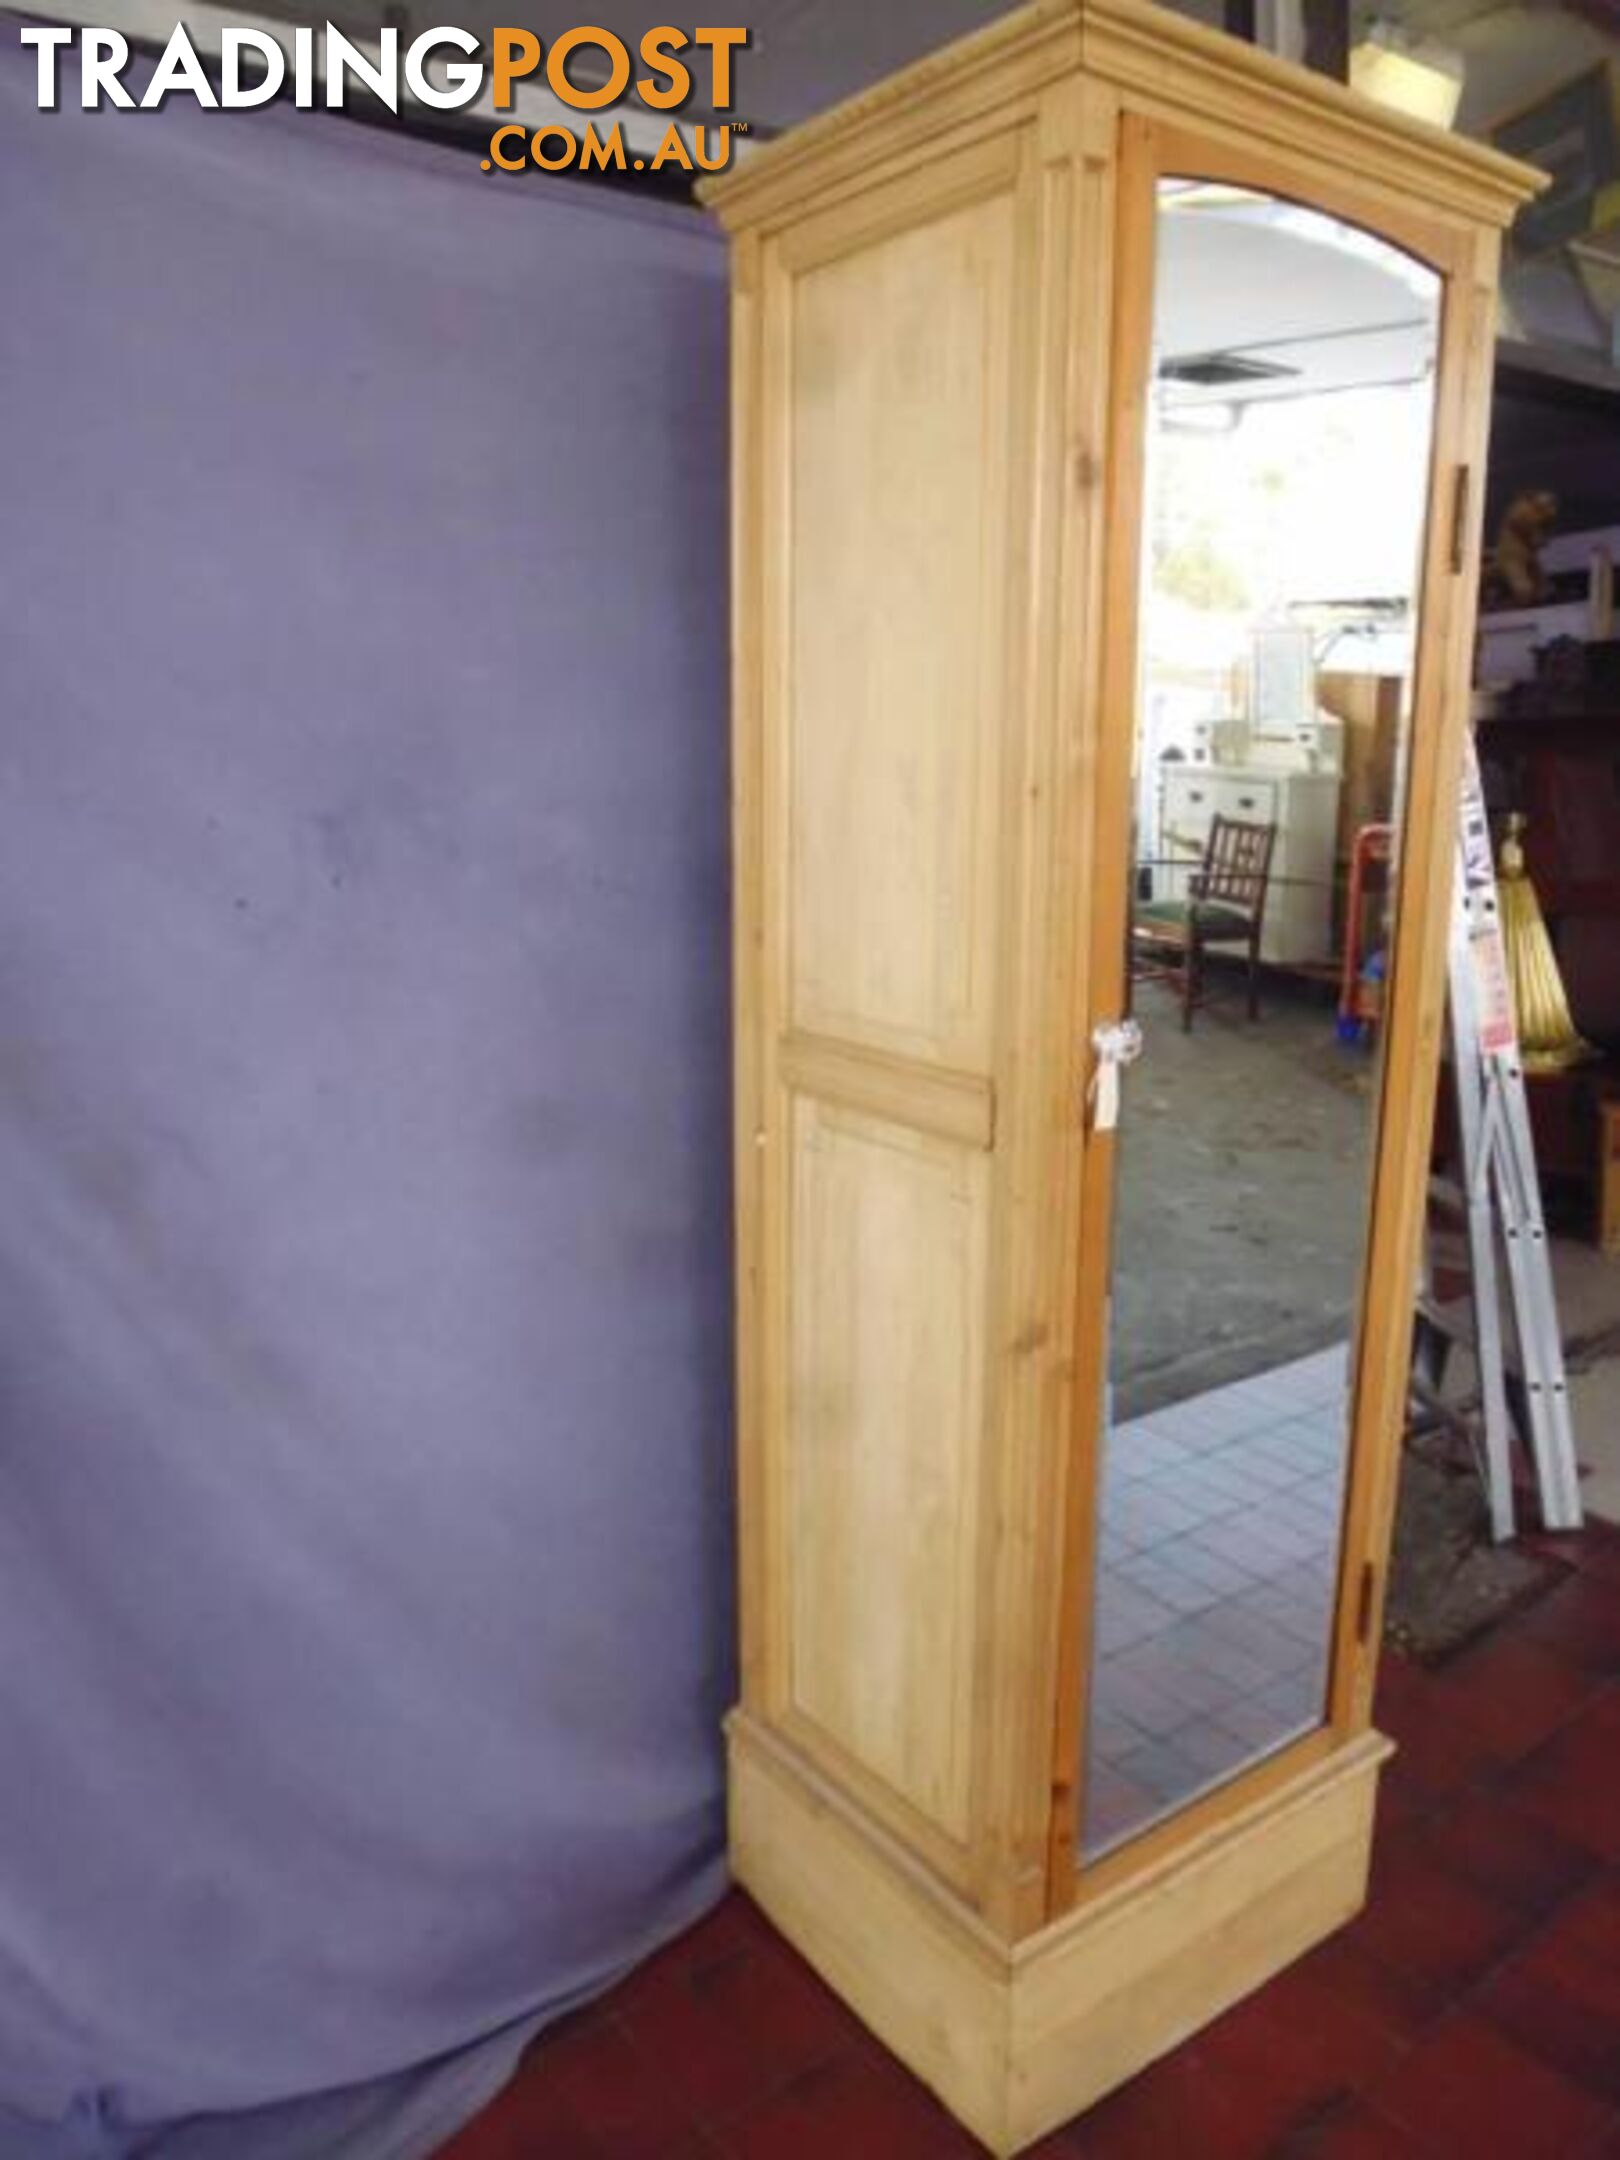 Wardrobe Single Door Baltic Pine with Mirror, 370005